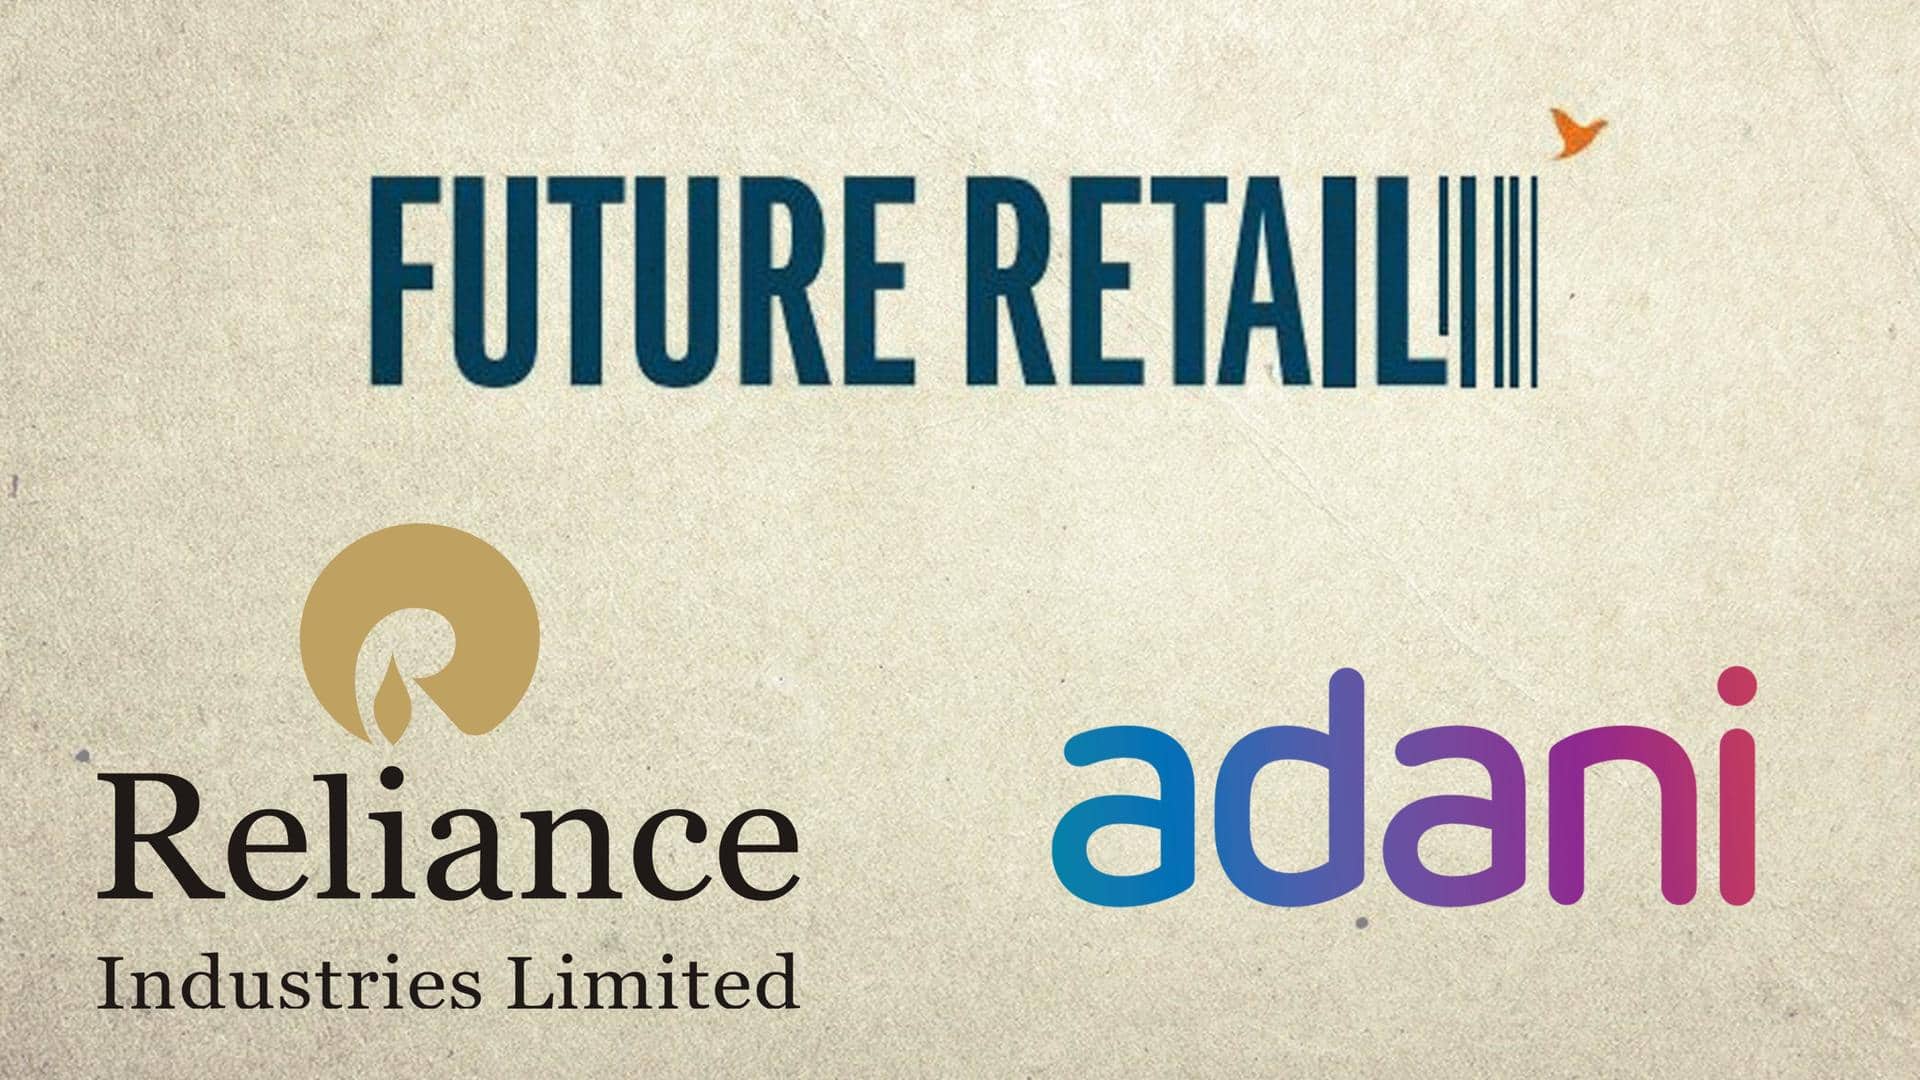 Reliance, Adani competing to acquire Future Retail: Journey so far